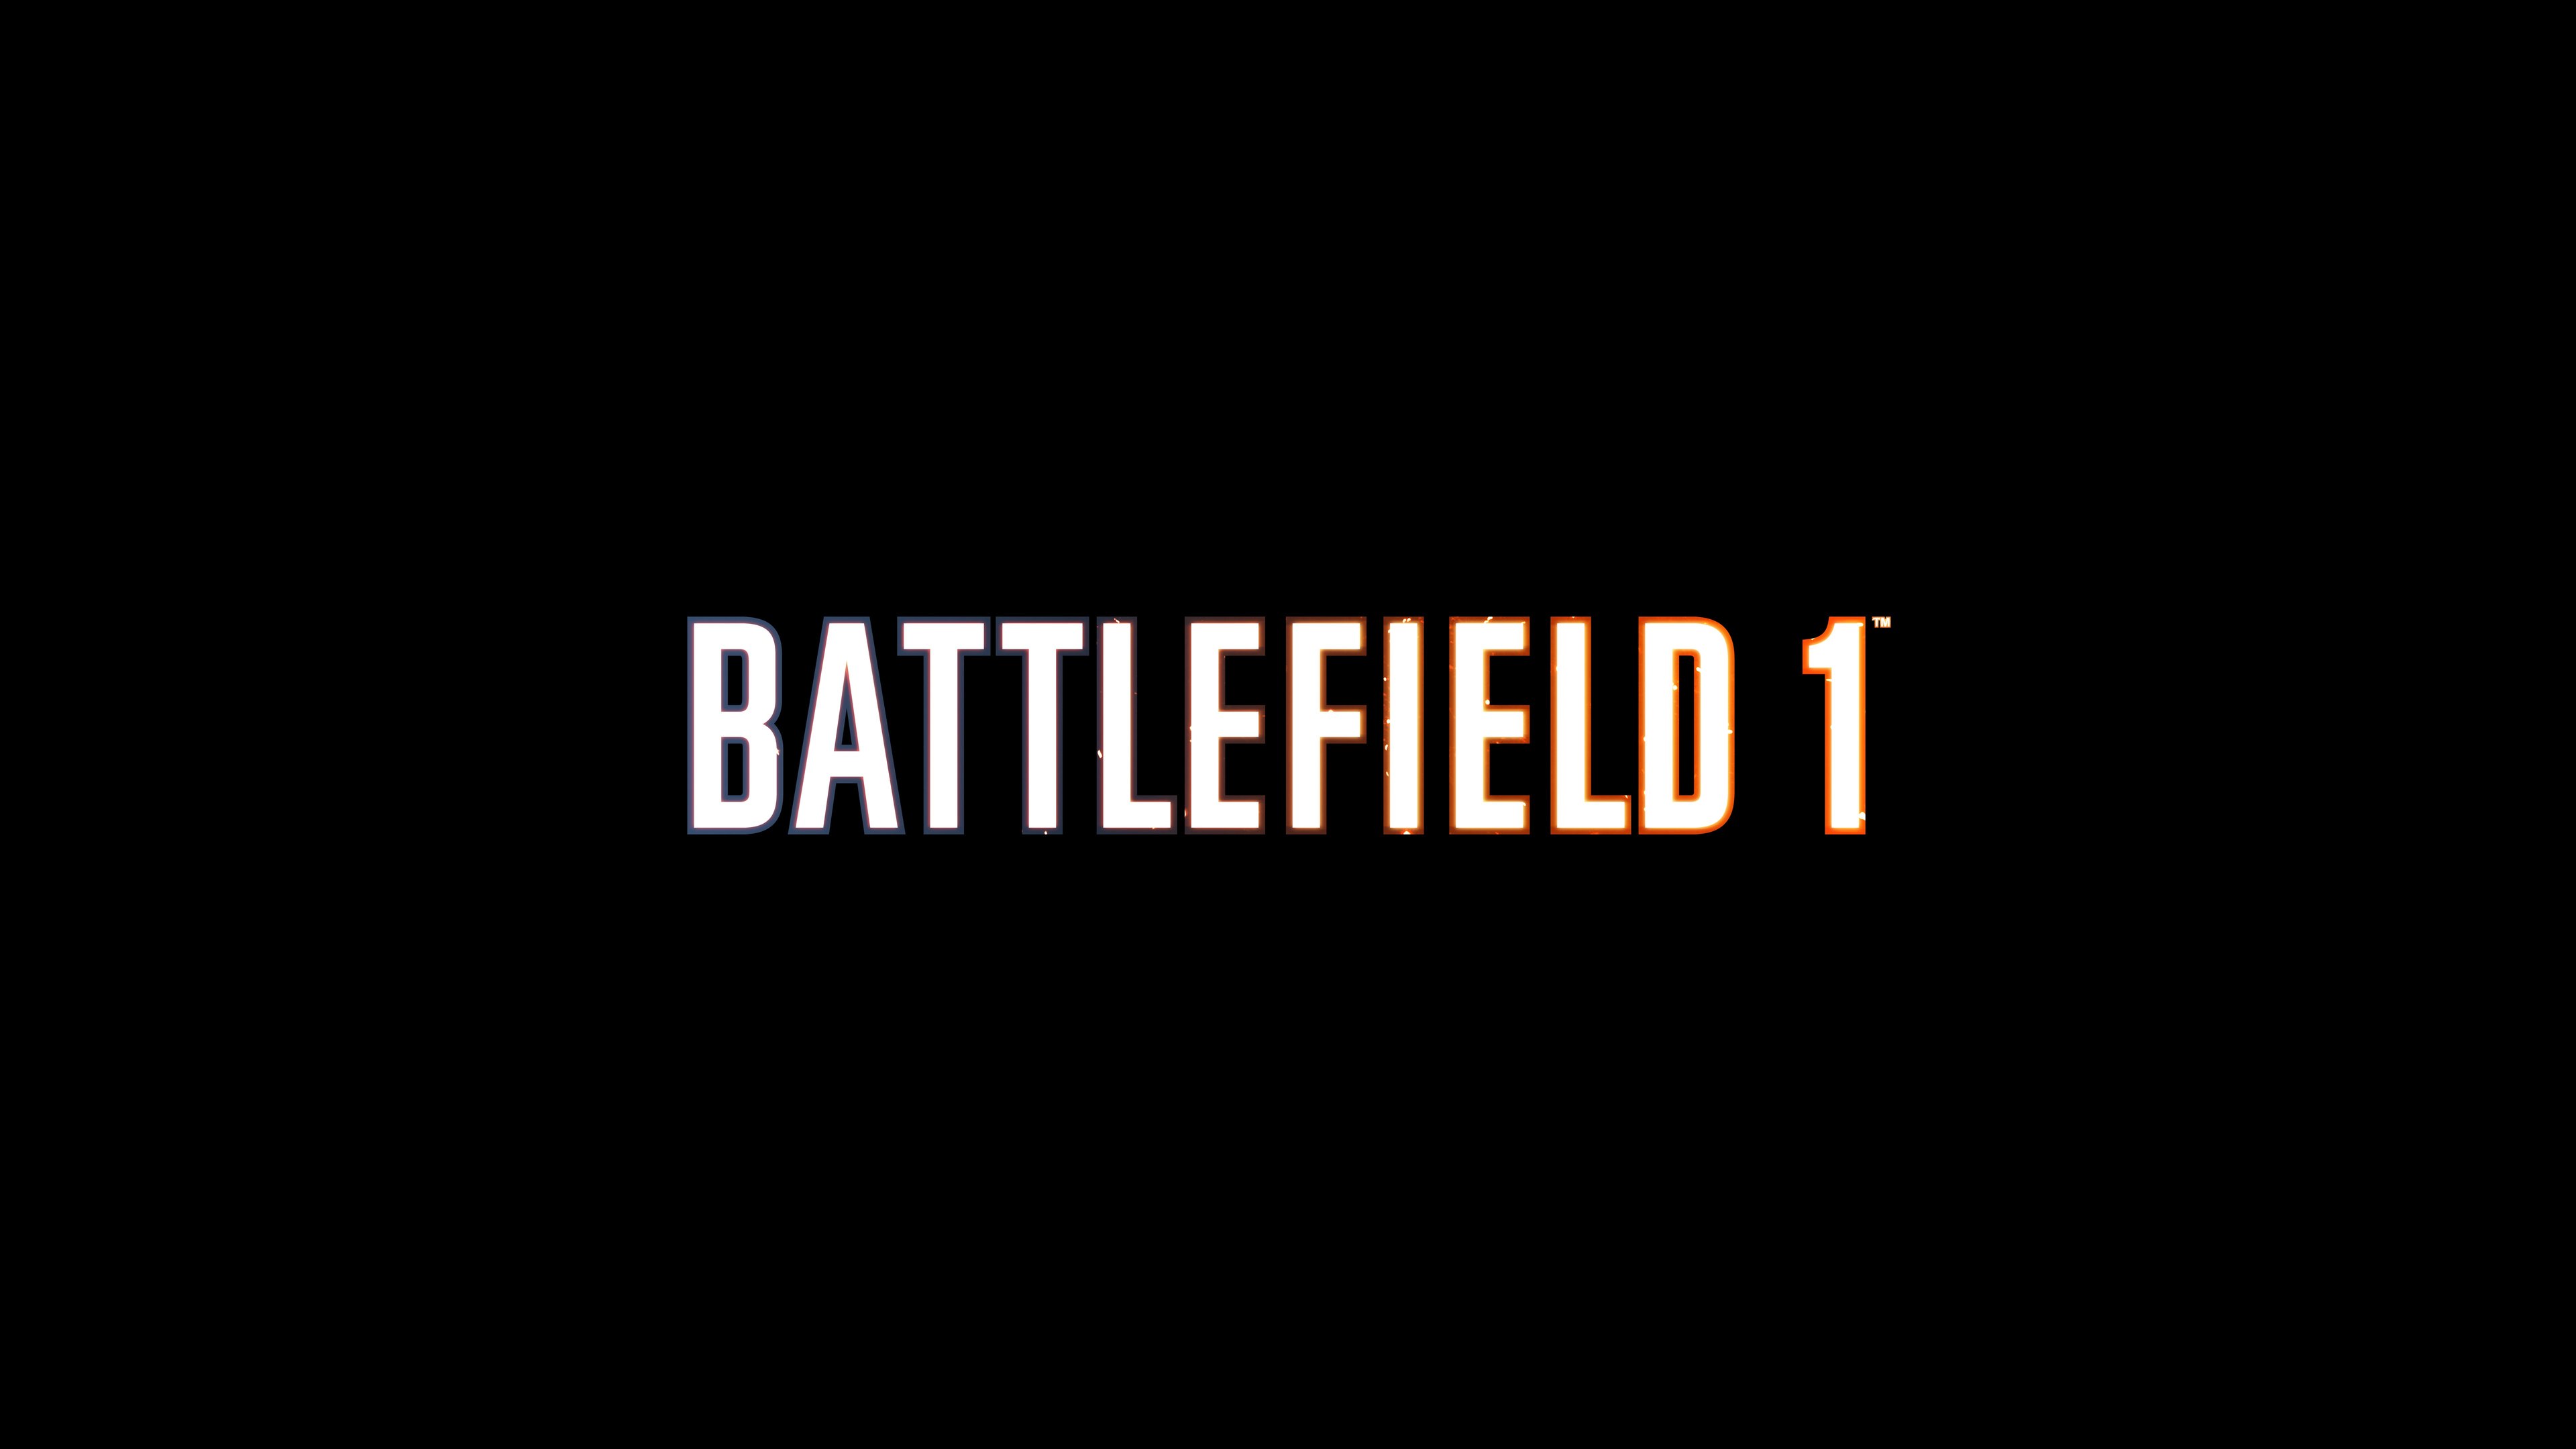 battlefield 1 logo 1536008995 - Battlefield 1 Logo - xbox games wallpapers, ps games wallpapers, pc games wallpapers, logo wallpapers, battlefield 1 wallpapers, 2016 games wallpapers